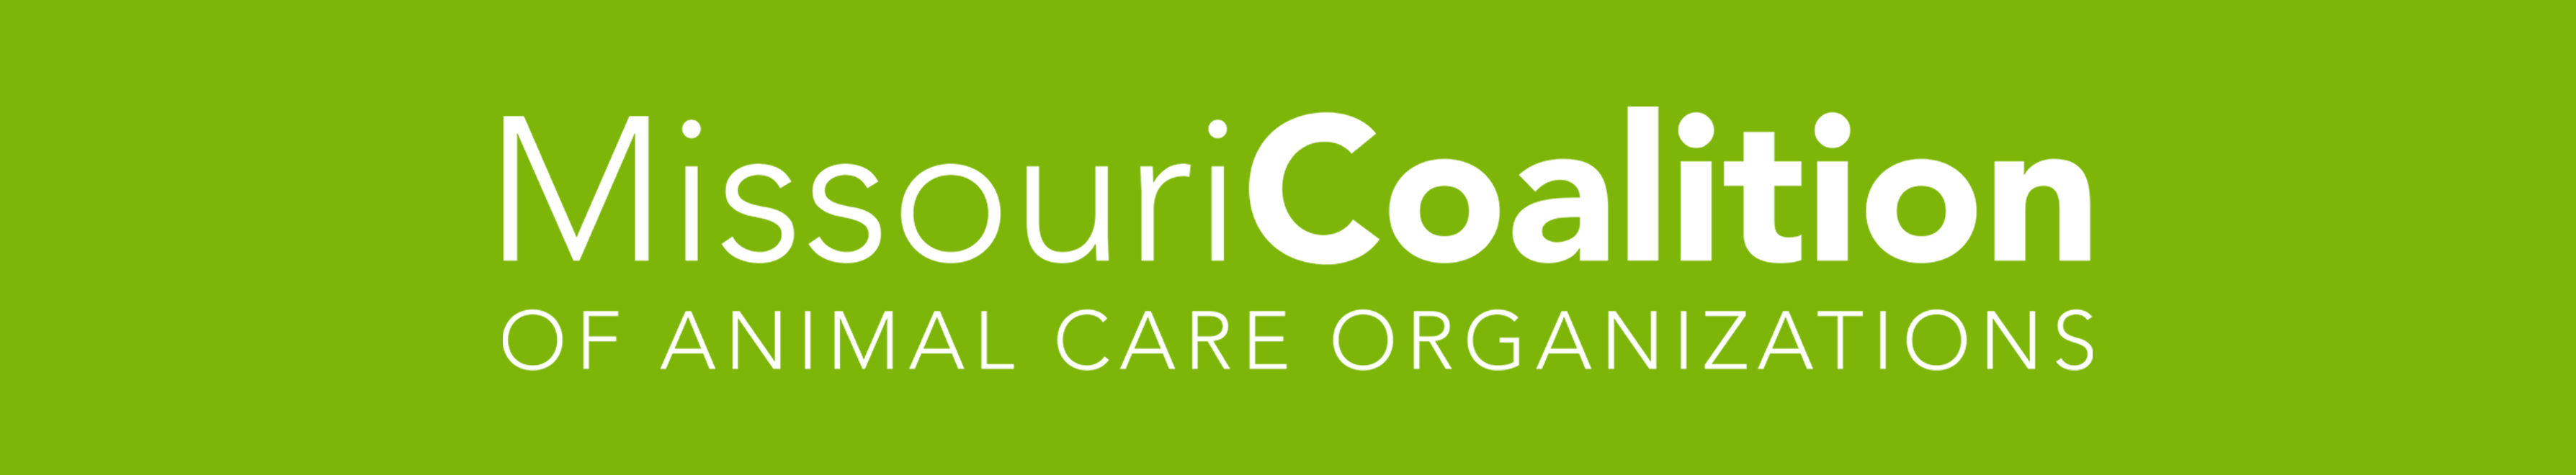 Missouri Coalition of Animal Care Organizations logo